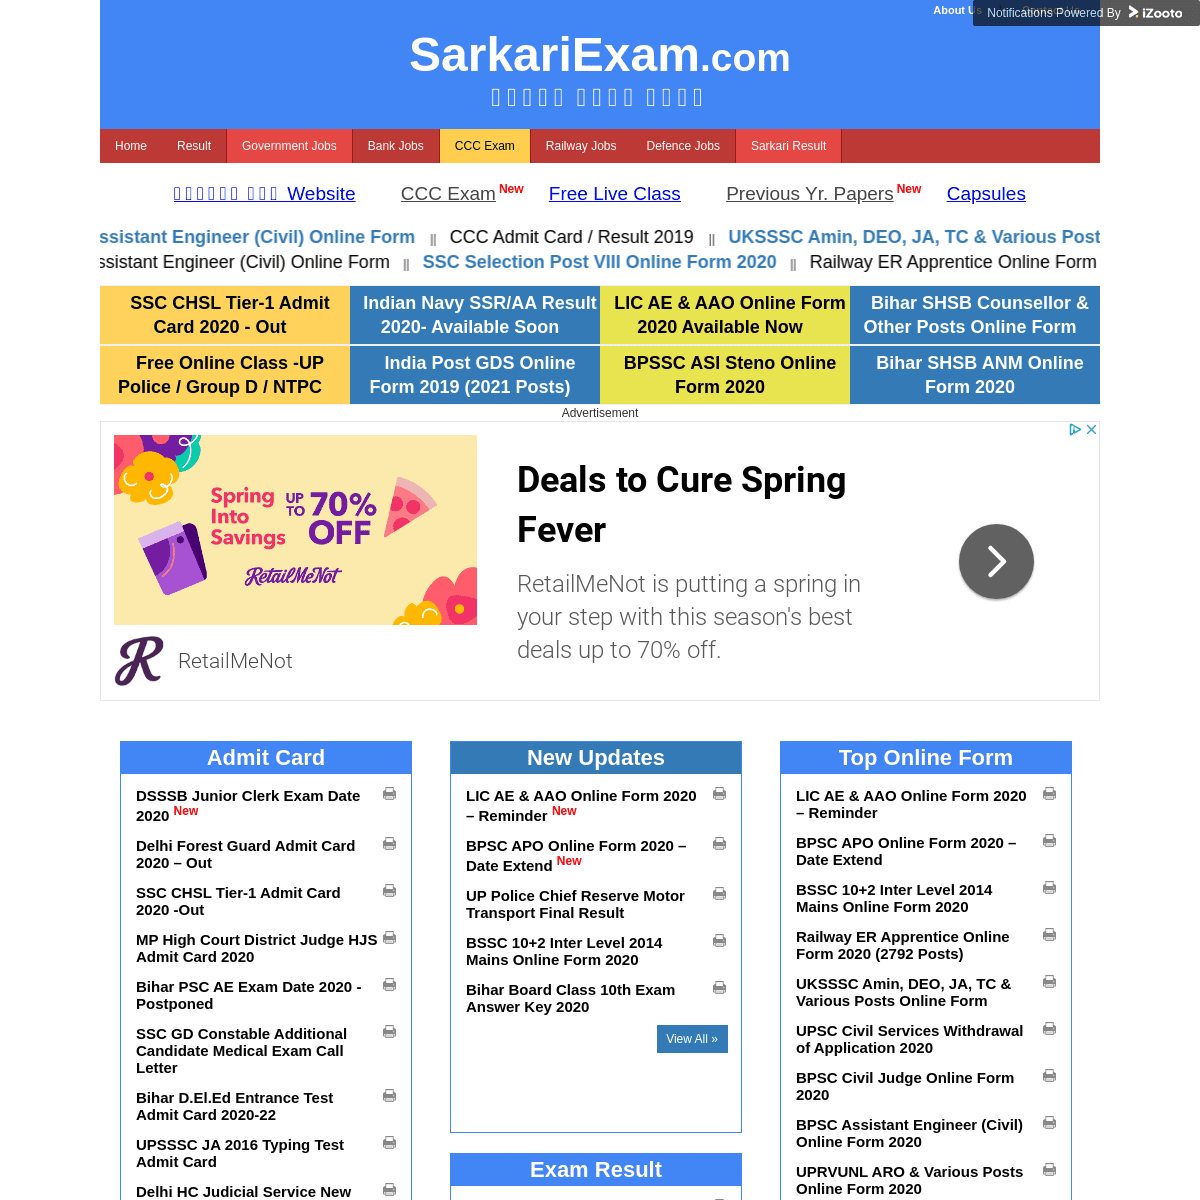 A complete backup of sarkariexam.com